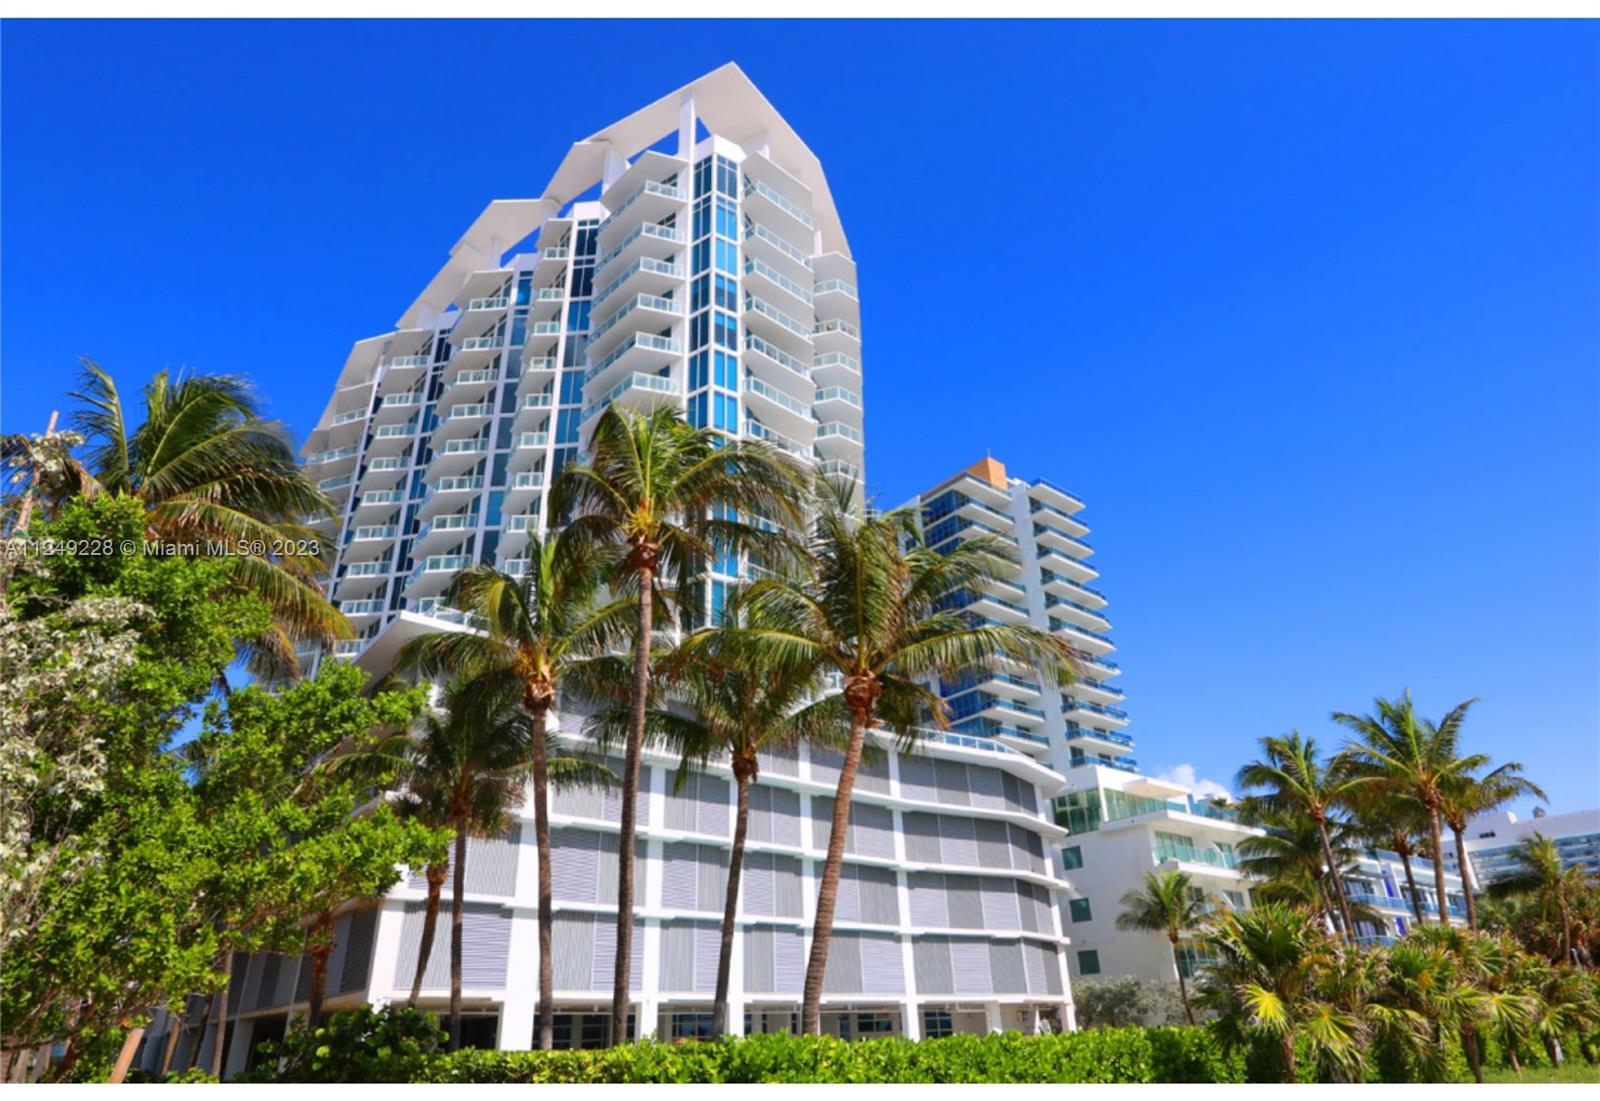 Rental Property at 6515 Collins Ave 902, Miami Beach, Miami-Dade County, Florida - Bedrooms: 2 
Bathrooms: 2  - $10,000 MO.